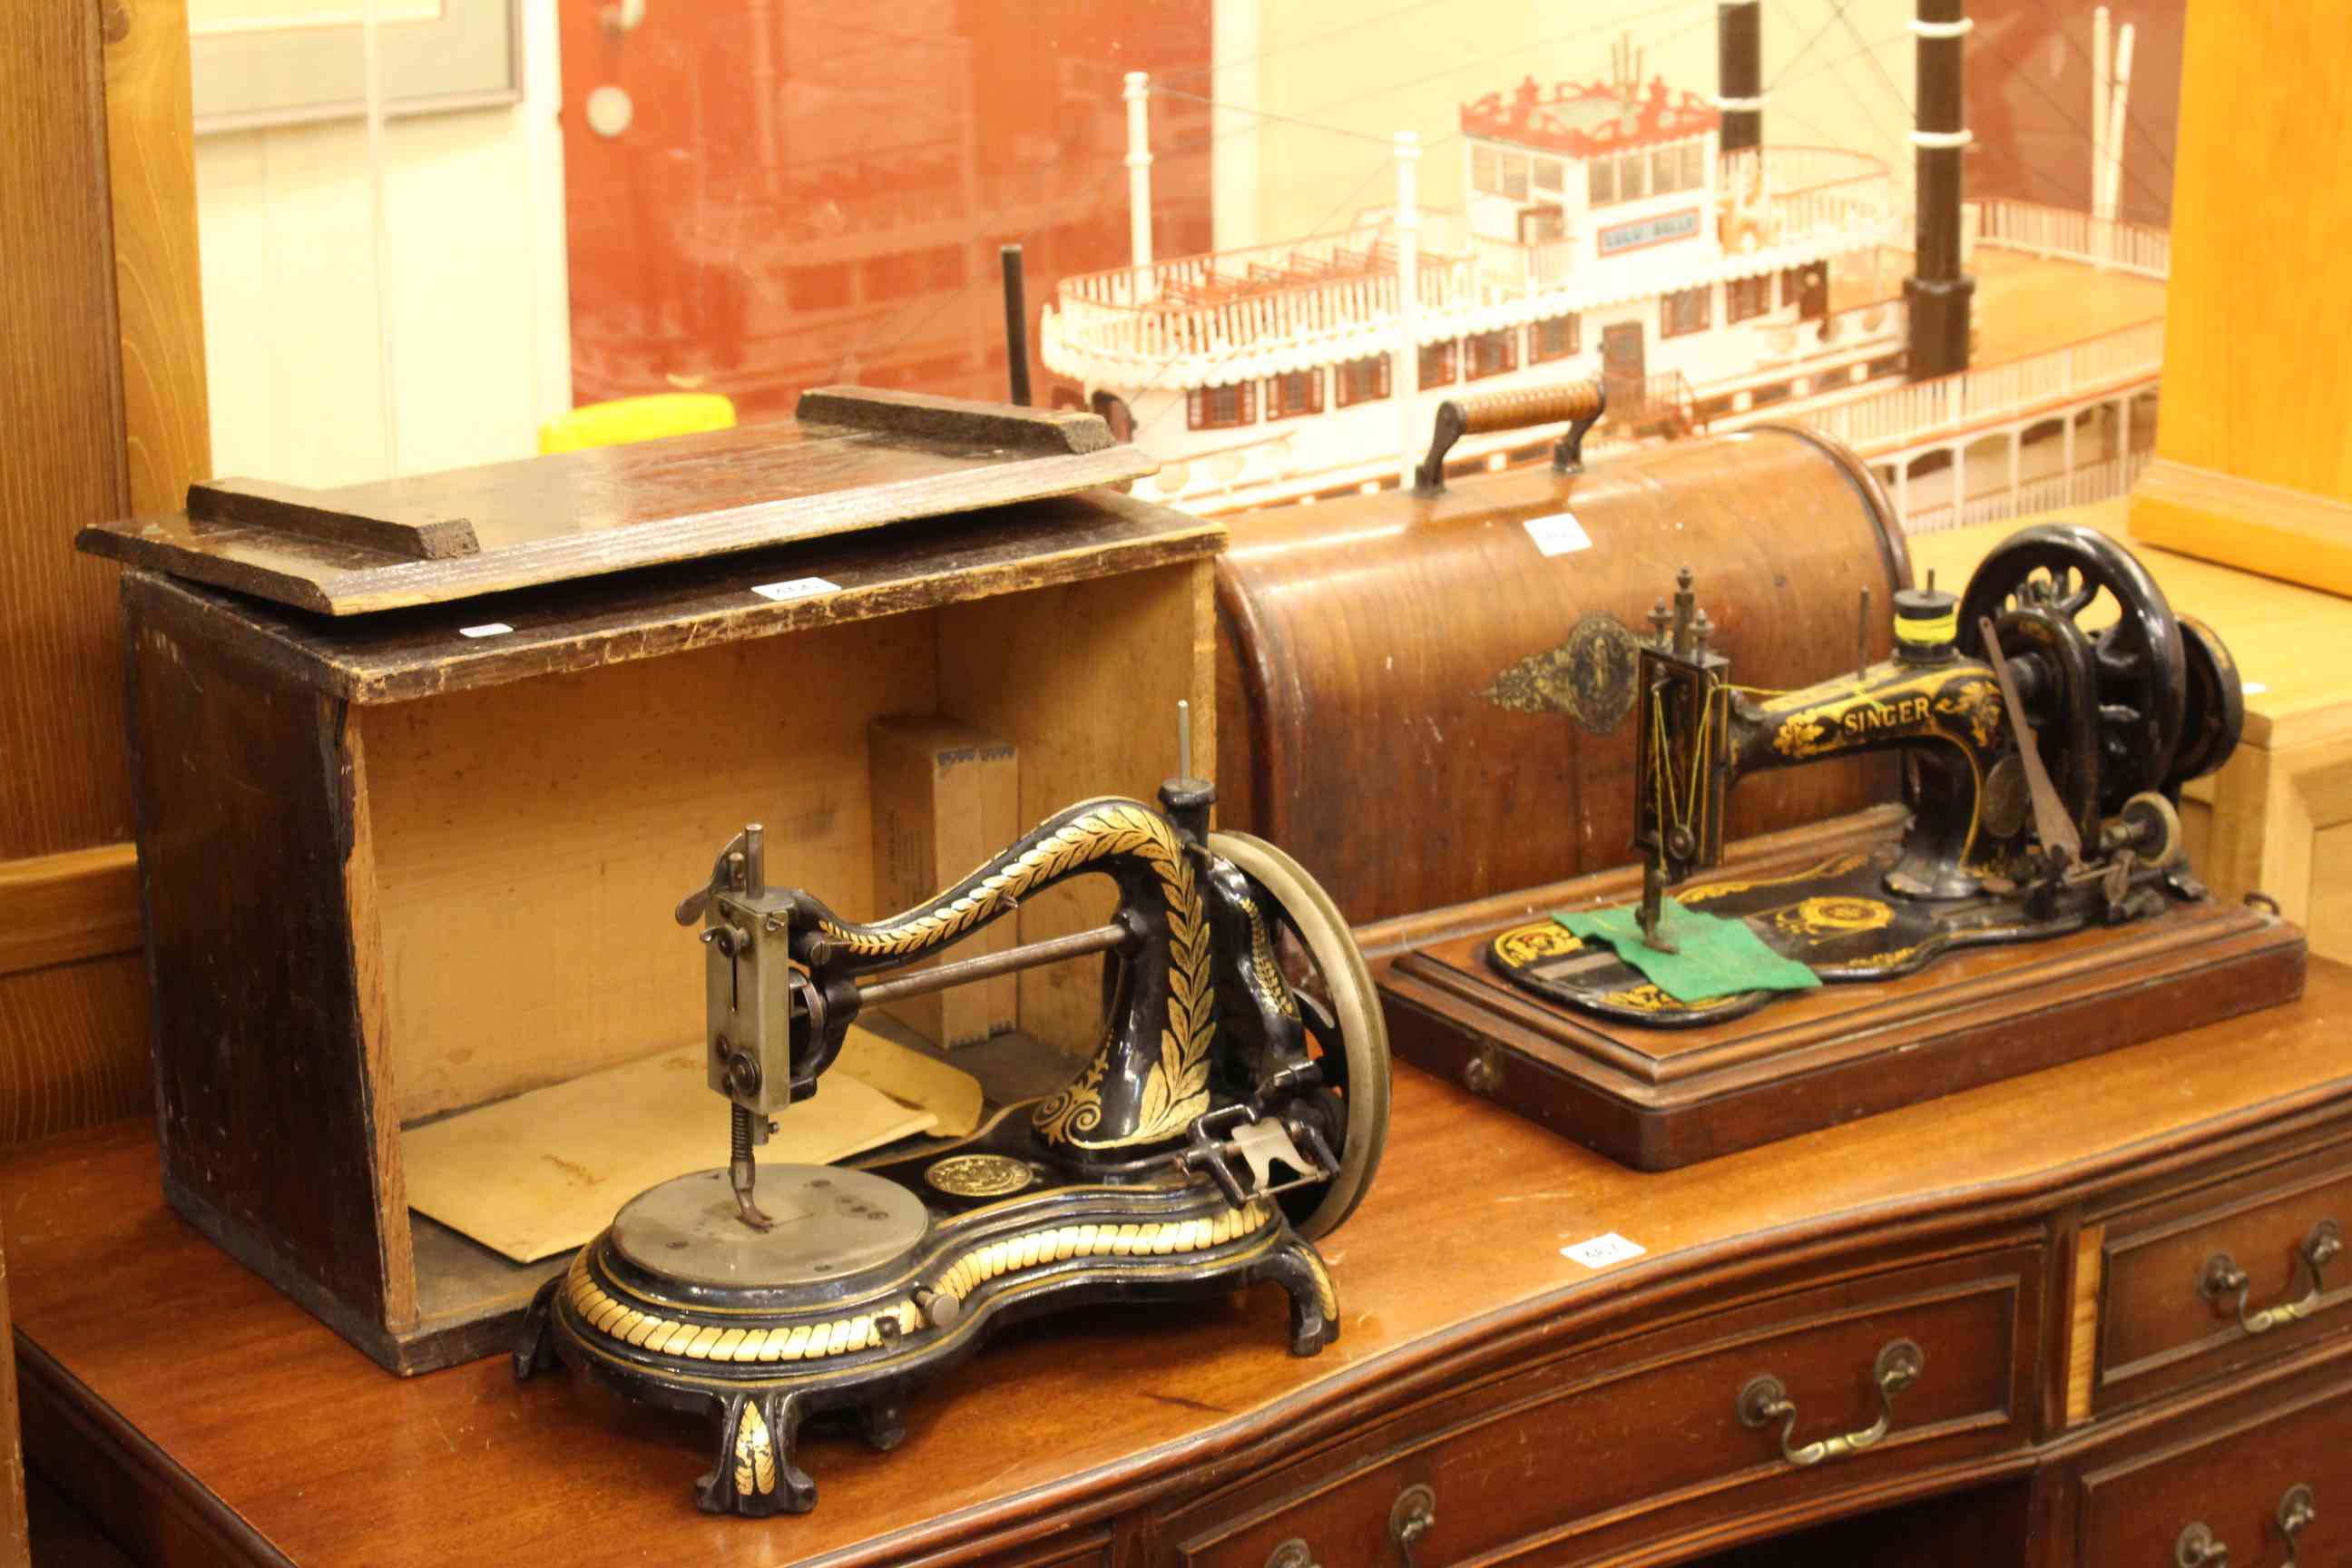 Vintage Jones hand sewing machine and vintage Singer hand sewing machine (2).